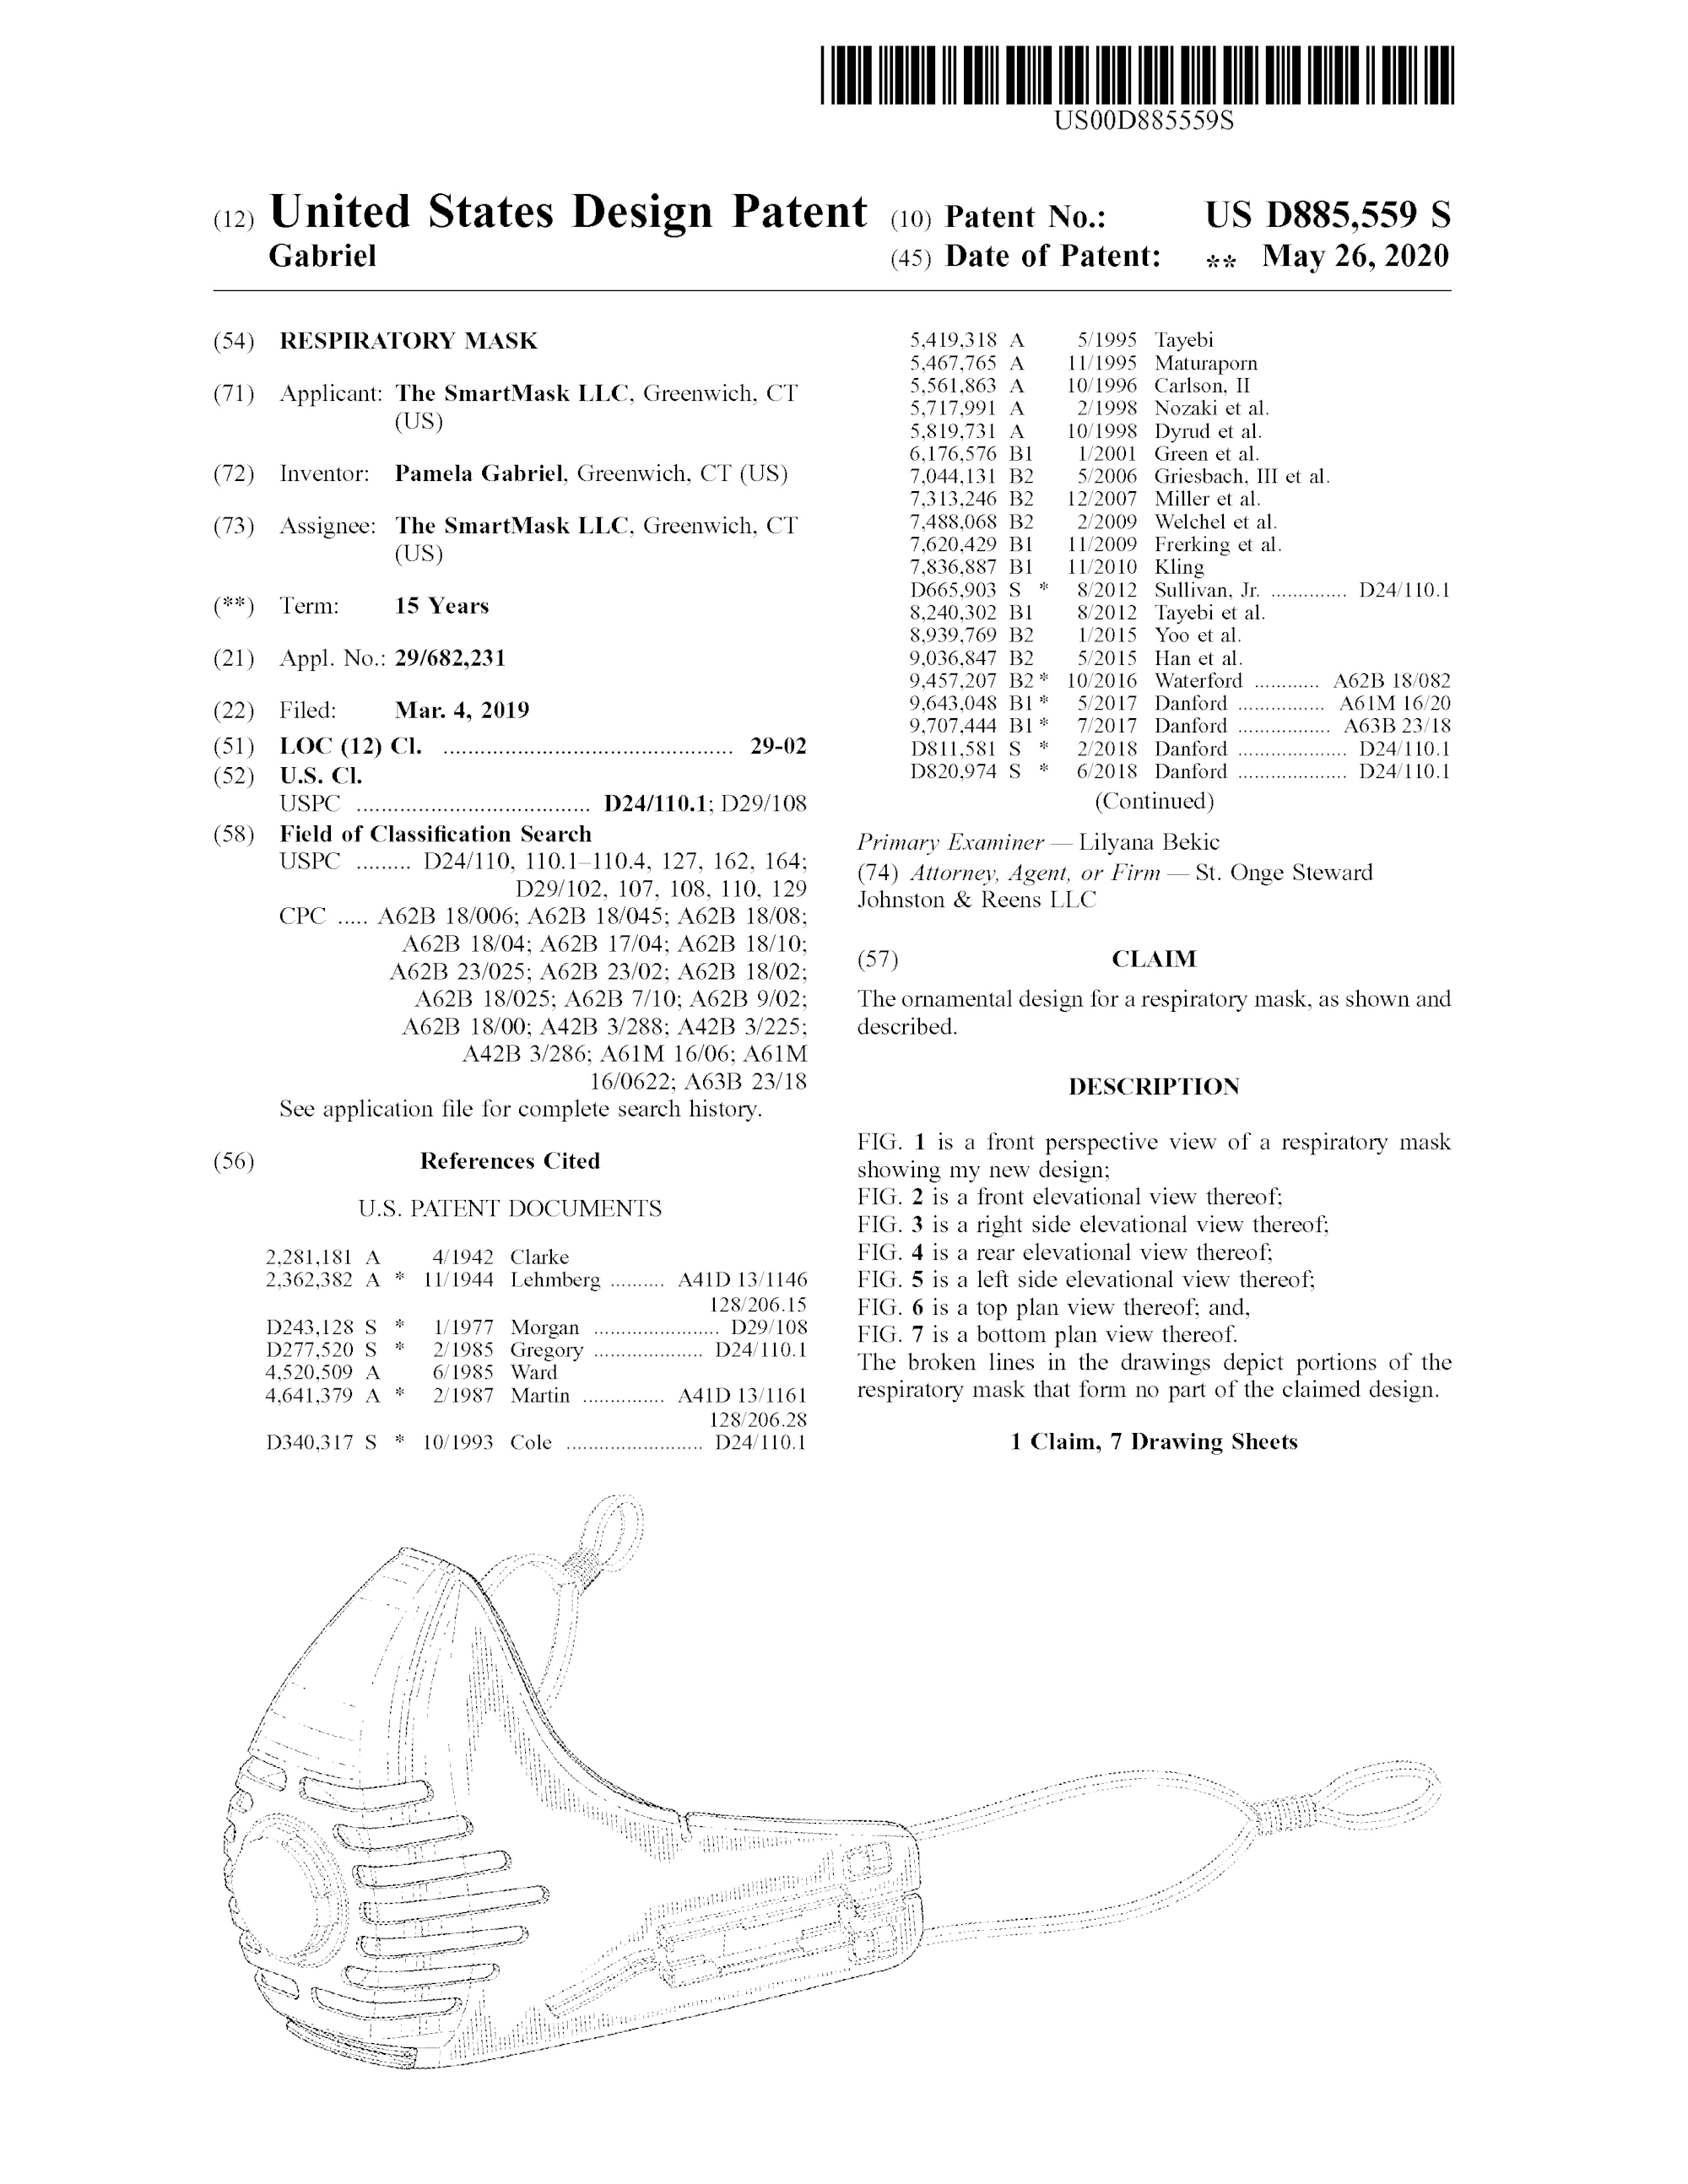 Respiratory Mask, Pamela Gabriel, for SmartMask, 2019/2020. Patent Number: USD 885,559, U.S. Patent Office 